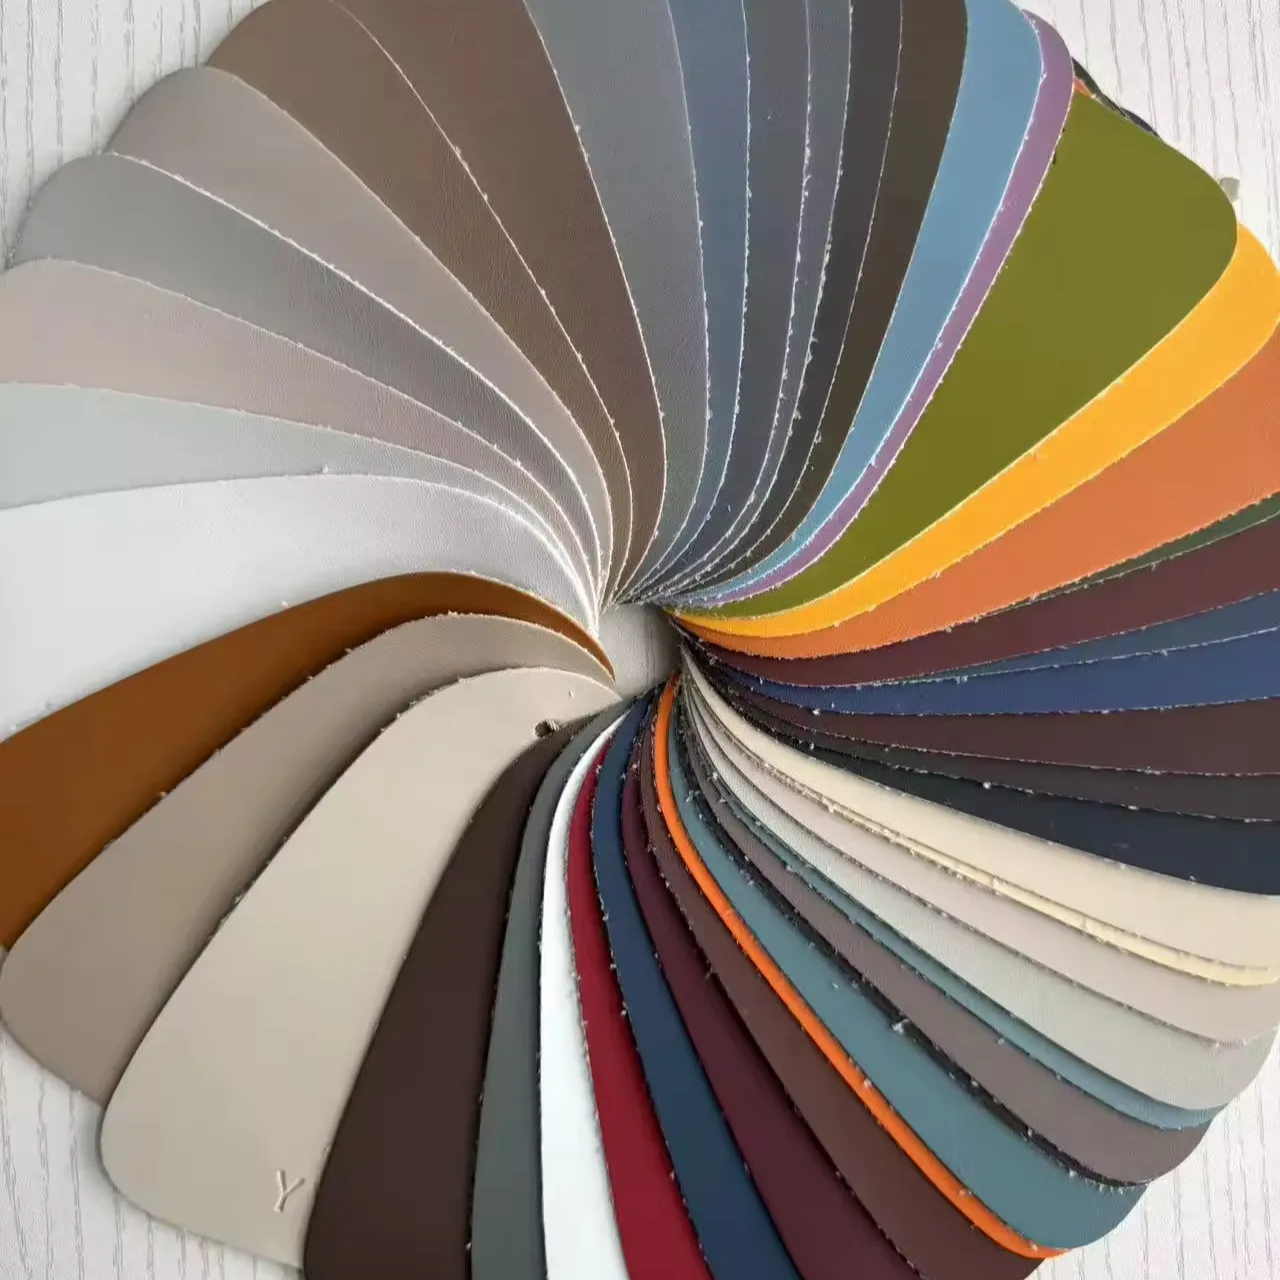 1,0 mm dicke YY-Serie Kunstleder aus PVC wildleder Bodenstoff in 45 Farben verfügbar